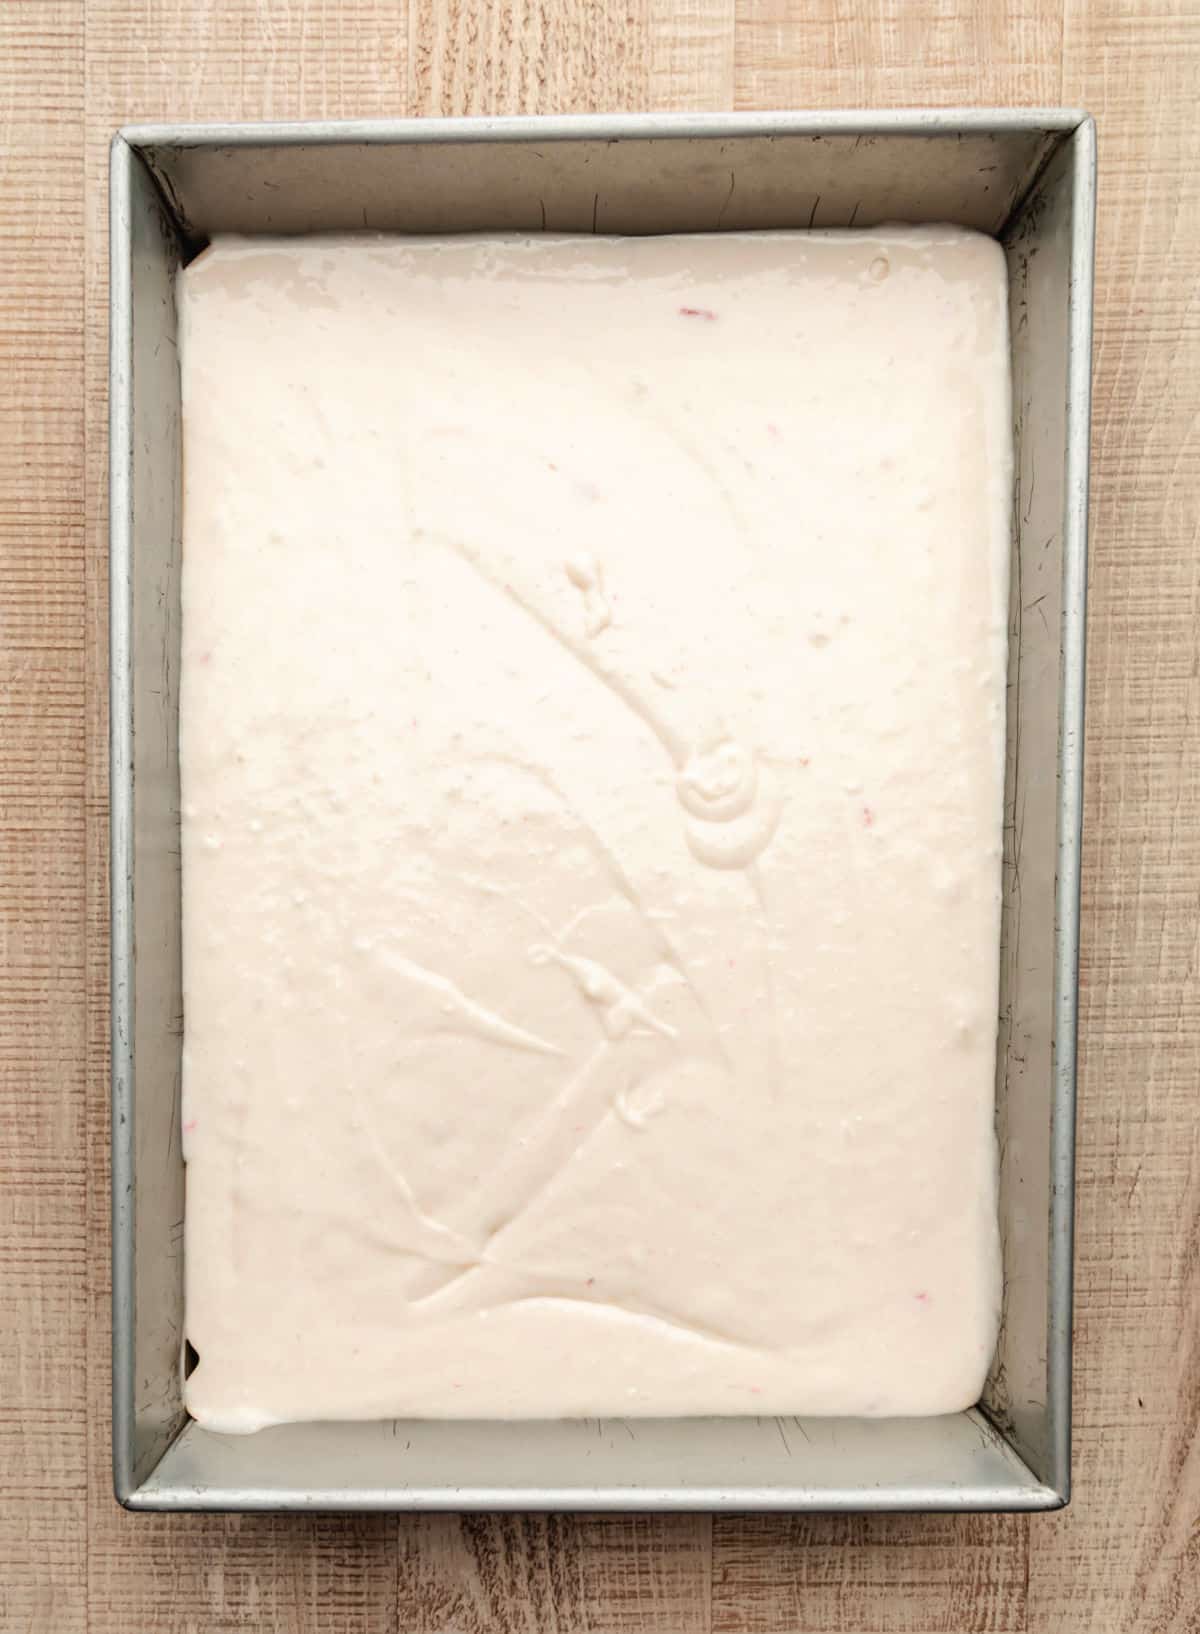 Strawberry yogurt cake batter in a 9 by 13 pan. 